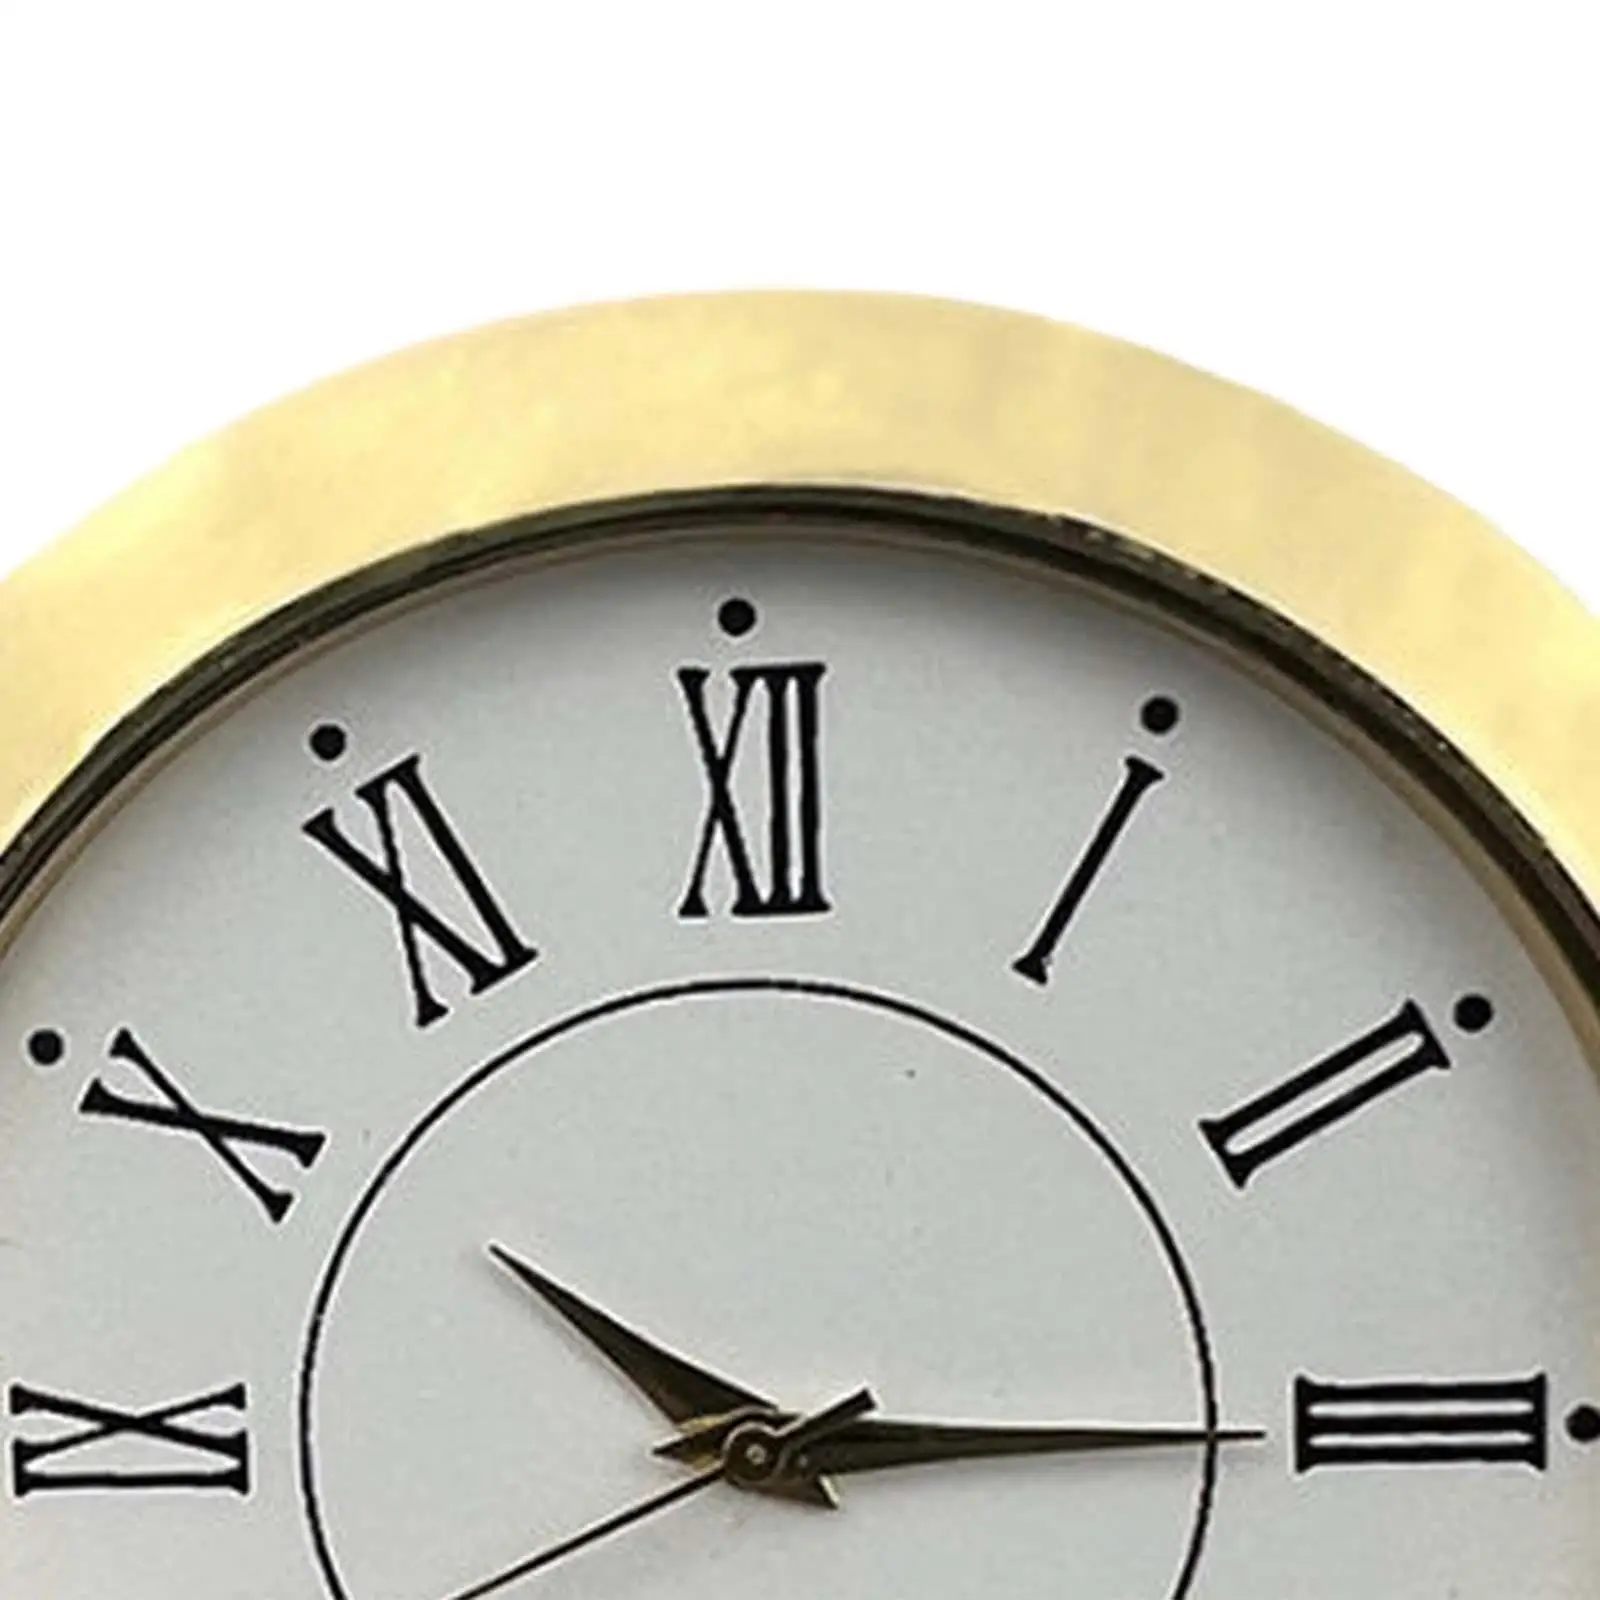 2-1/8 inch (55 mm) Insert Gold Clock Easy to Read Mini Clock for Bedroom Living Room Office Built in Clocks Self Installation